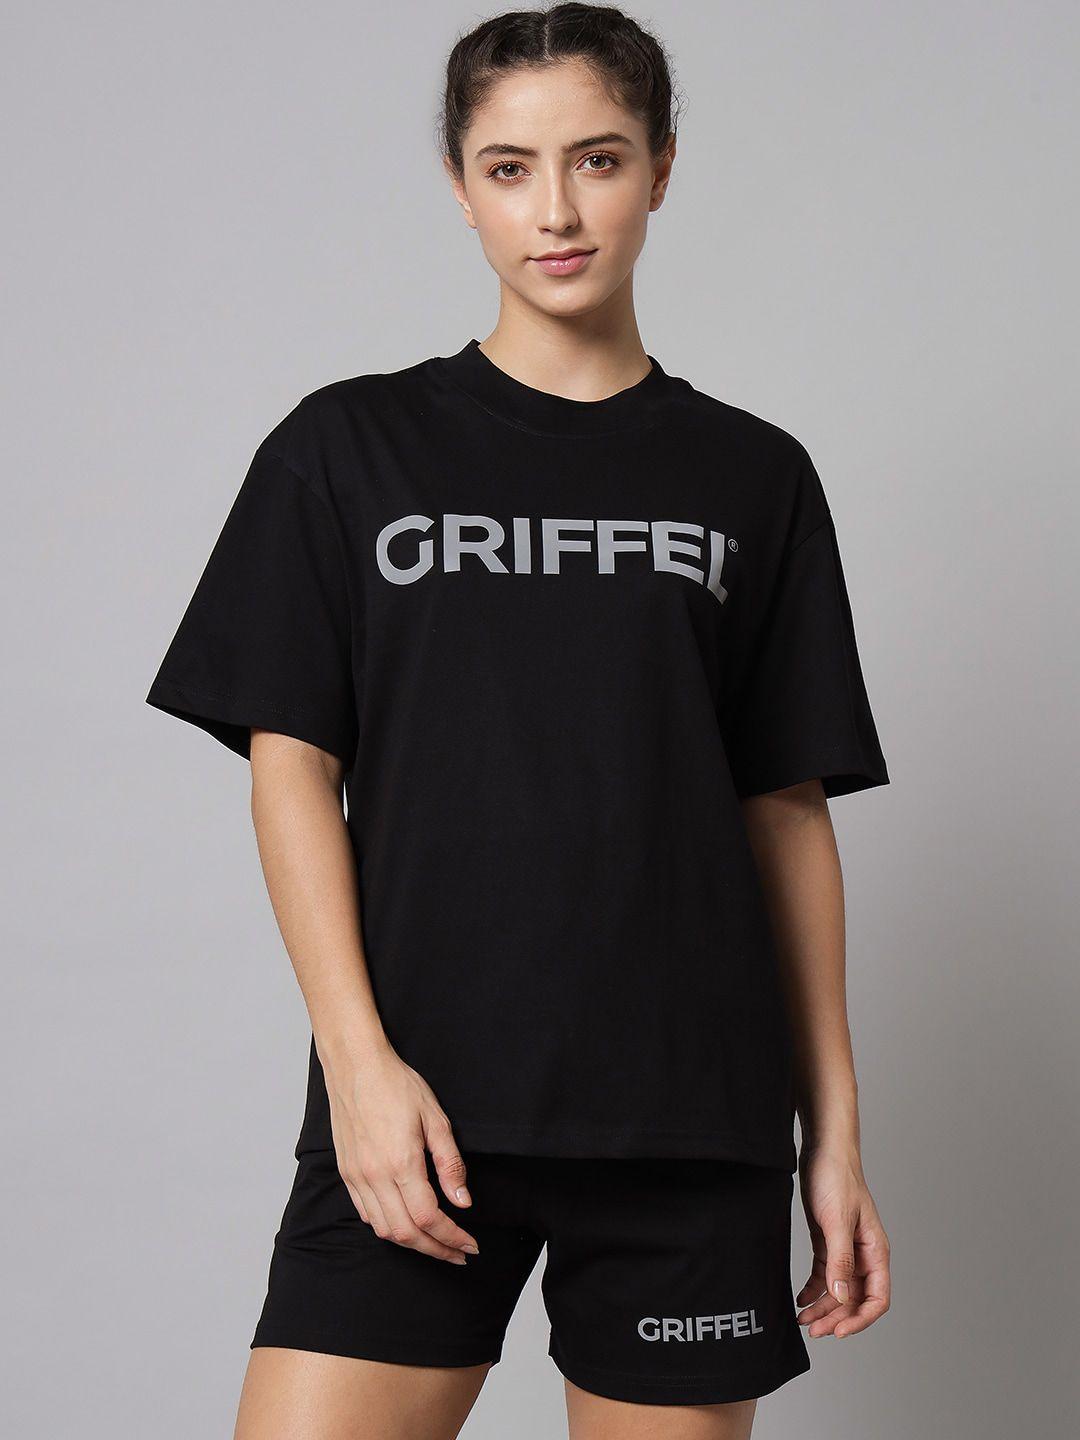 griffel women black clothing set